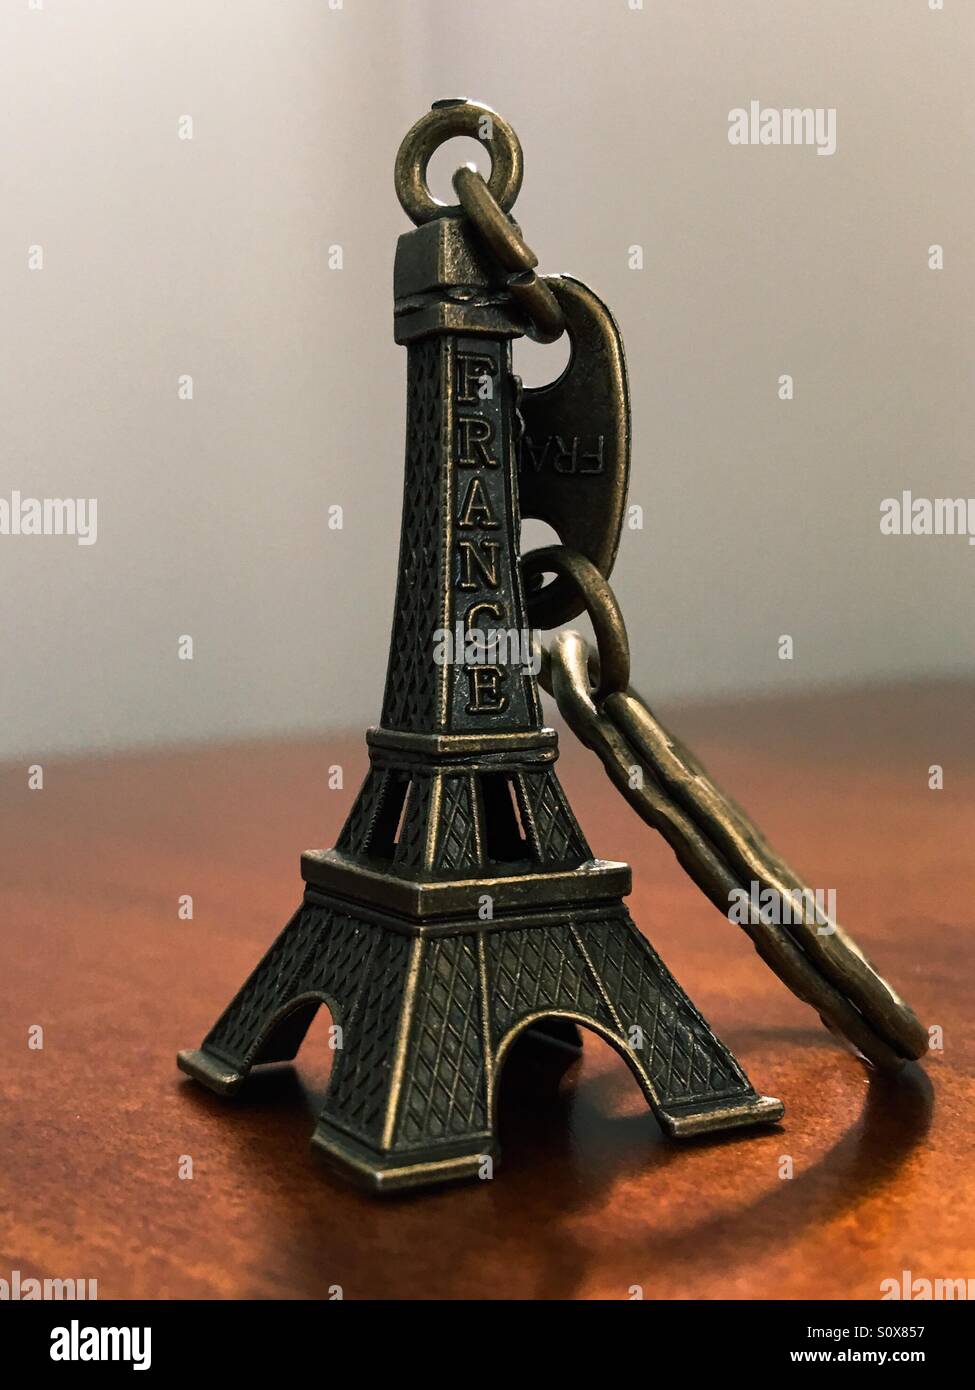 Miniature Eiffel Tower Stock Photo